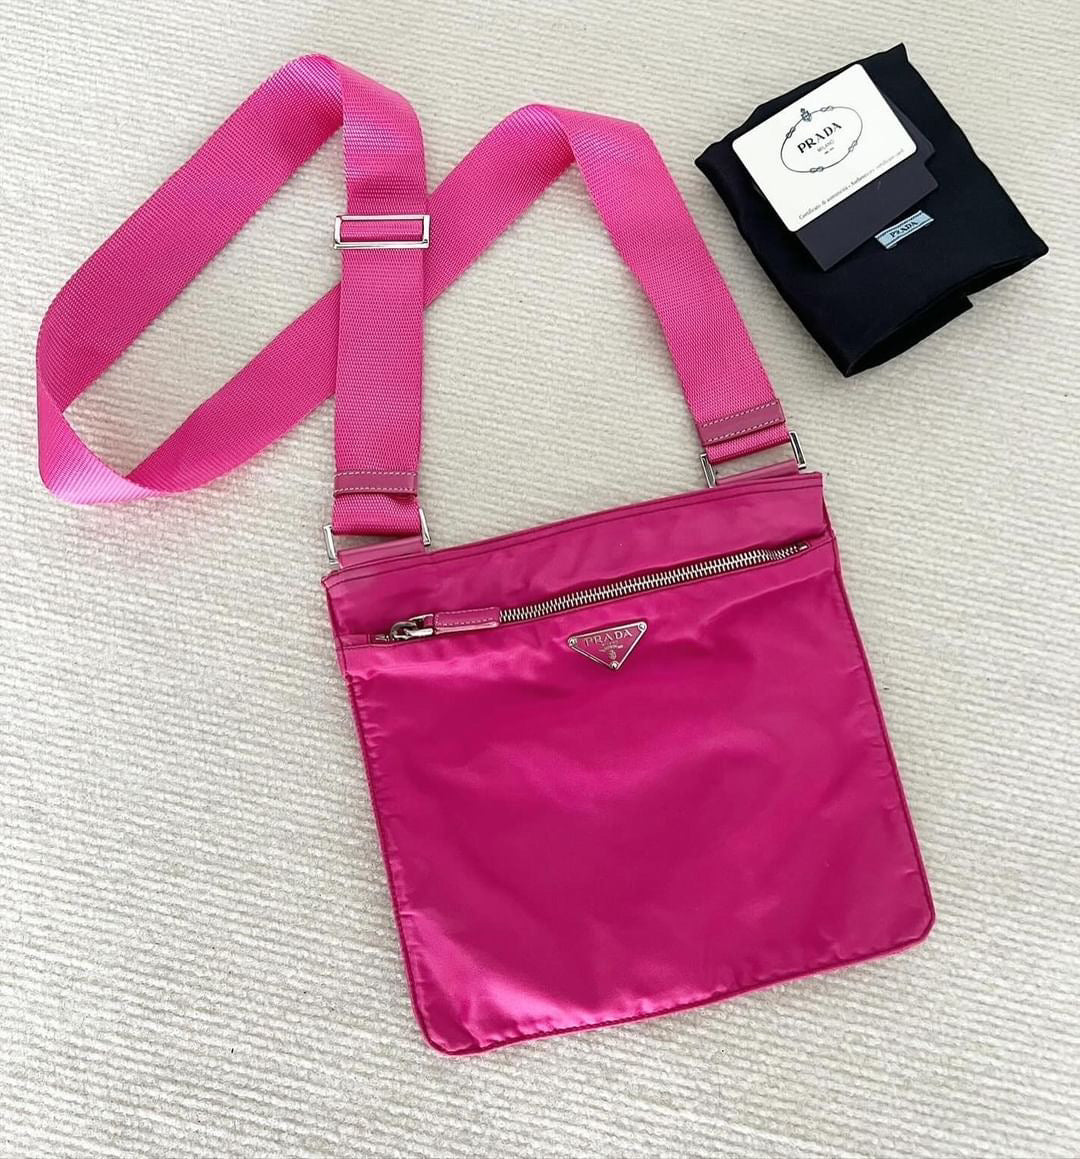 Prada pink nylon messenger bag